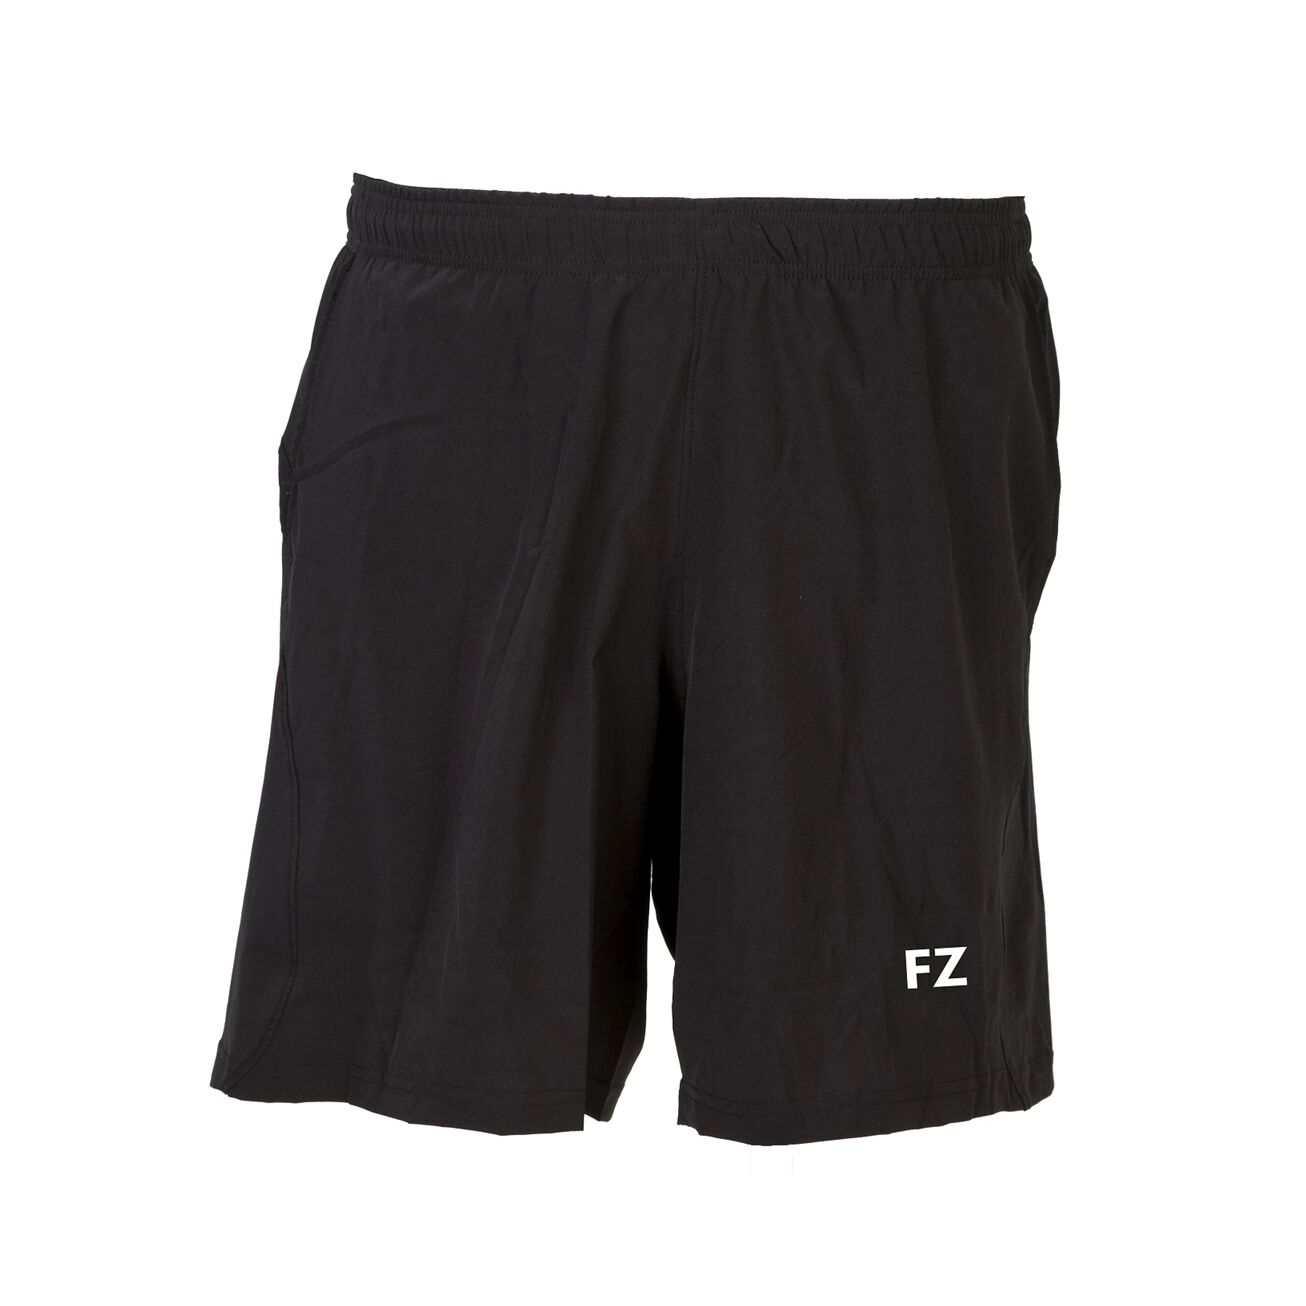 FZ Forza Ajax Shorts Men Black L